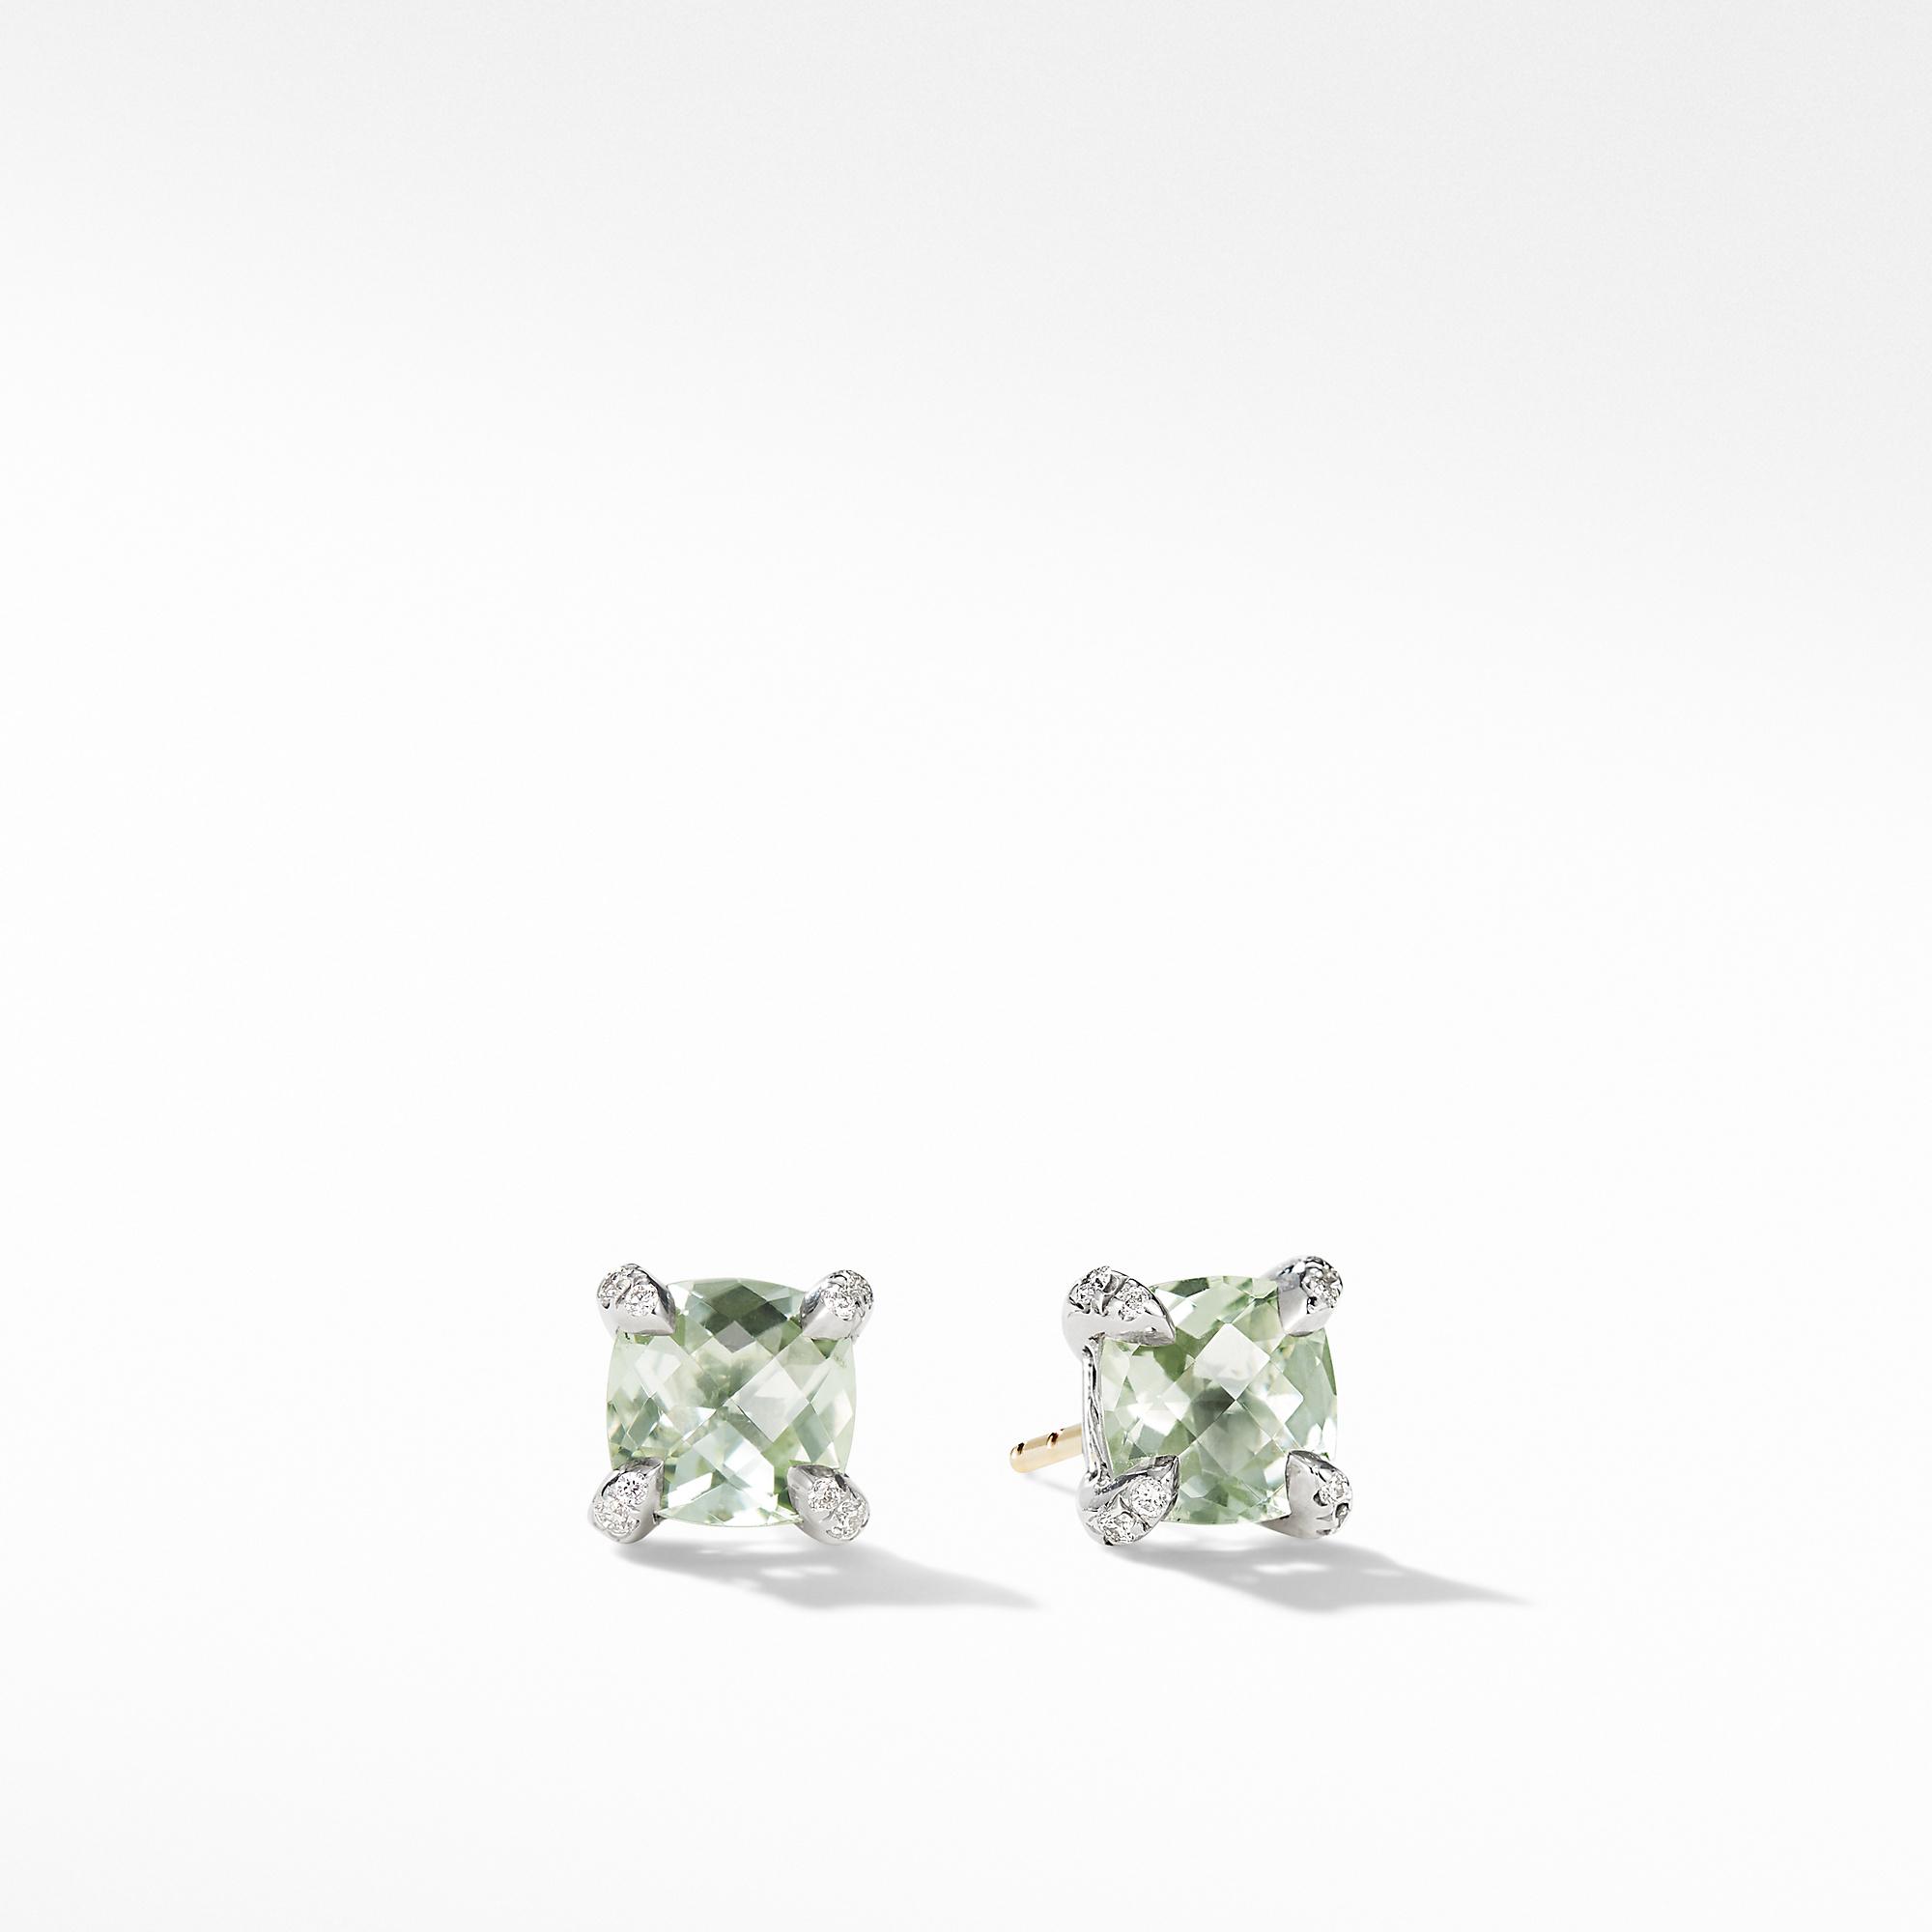 David Yurman Petite Chatelaine Stud Earrings with Prasiolite and Diamonds